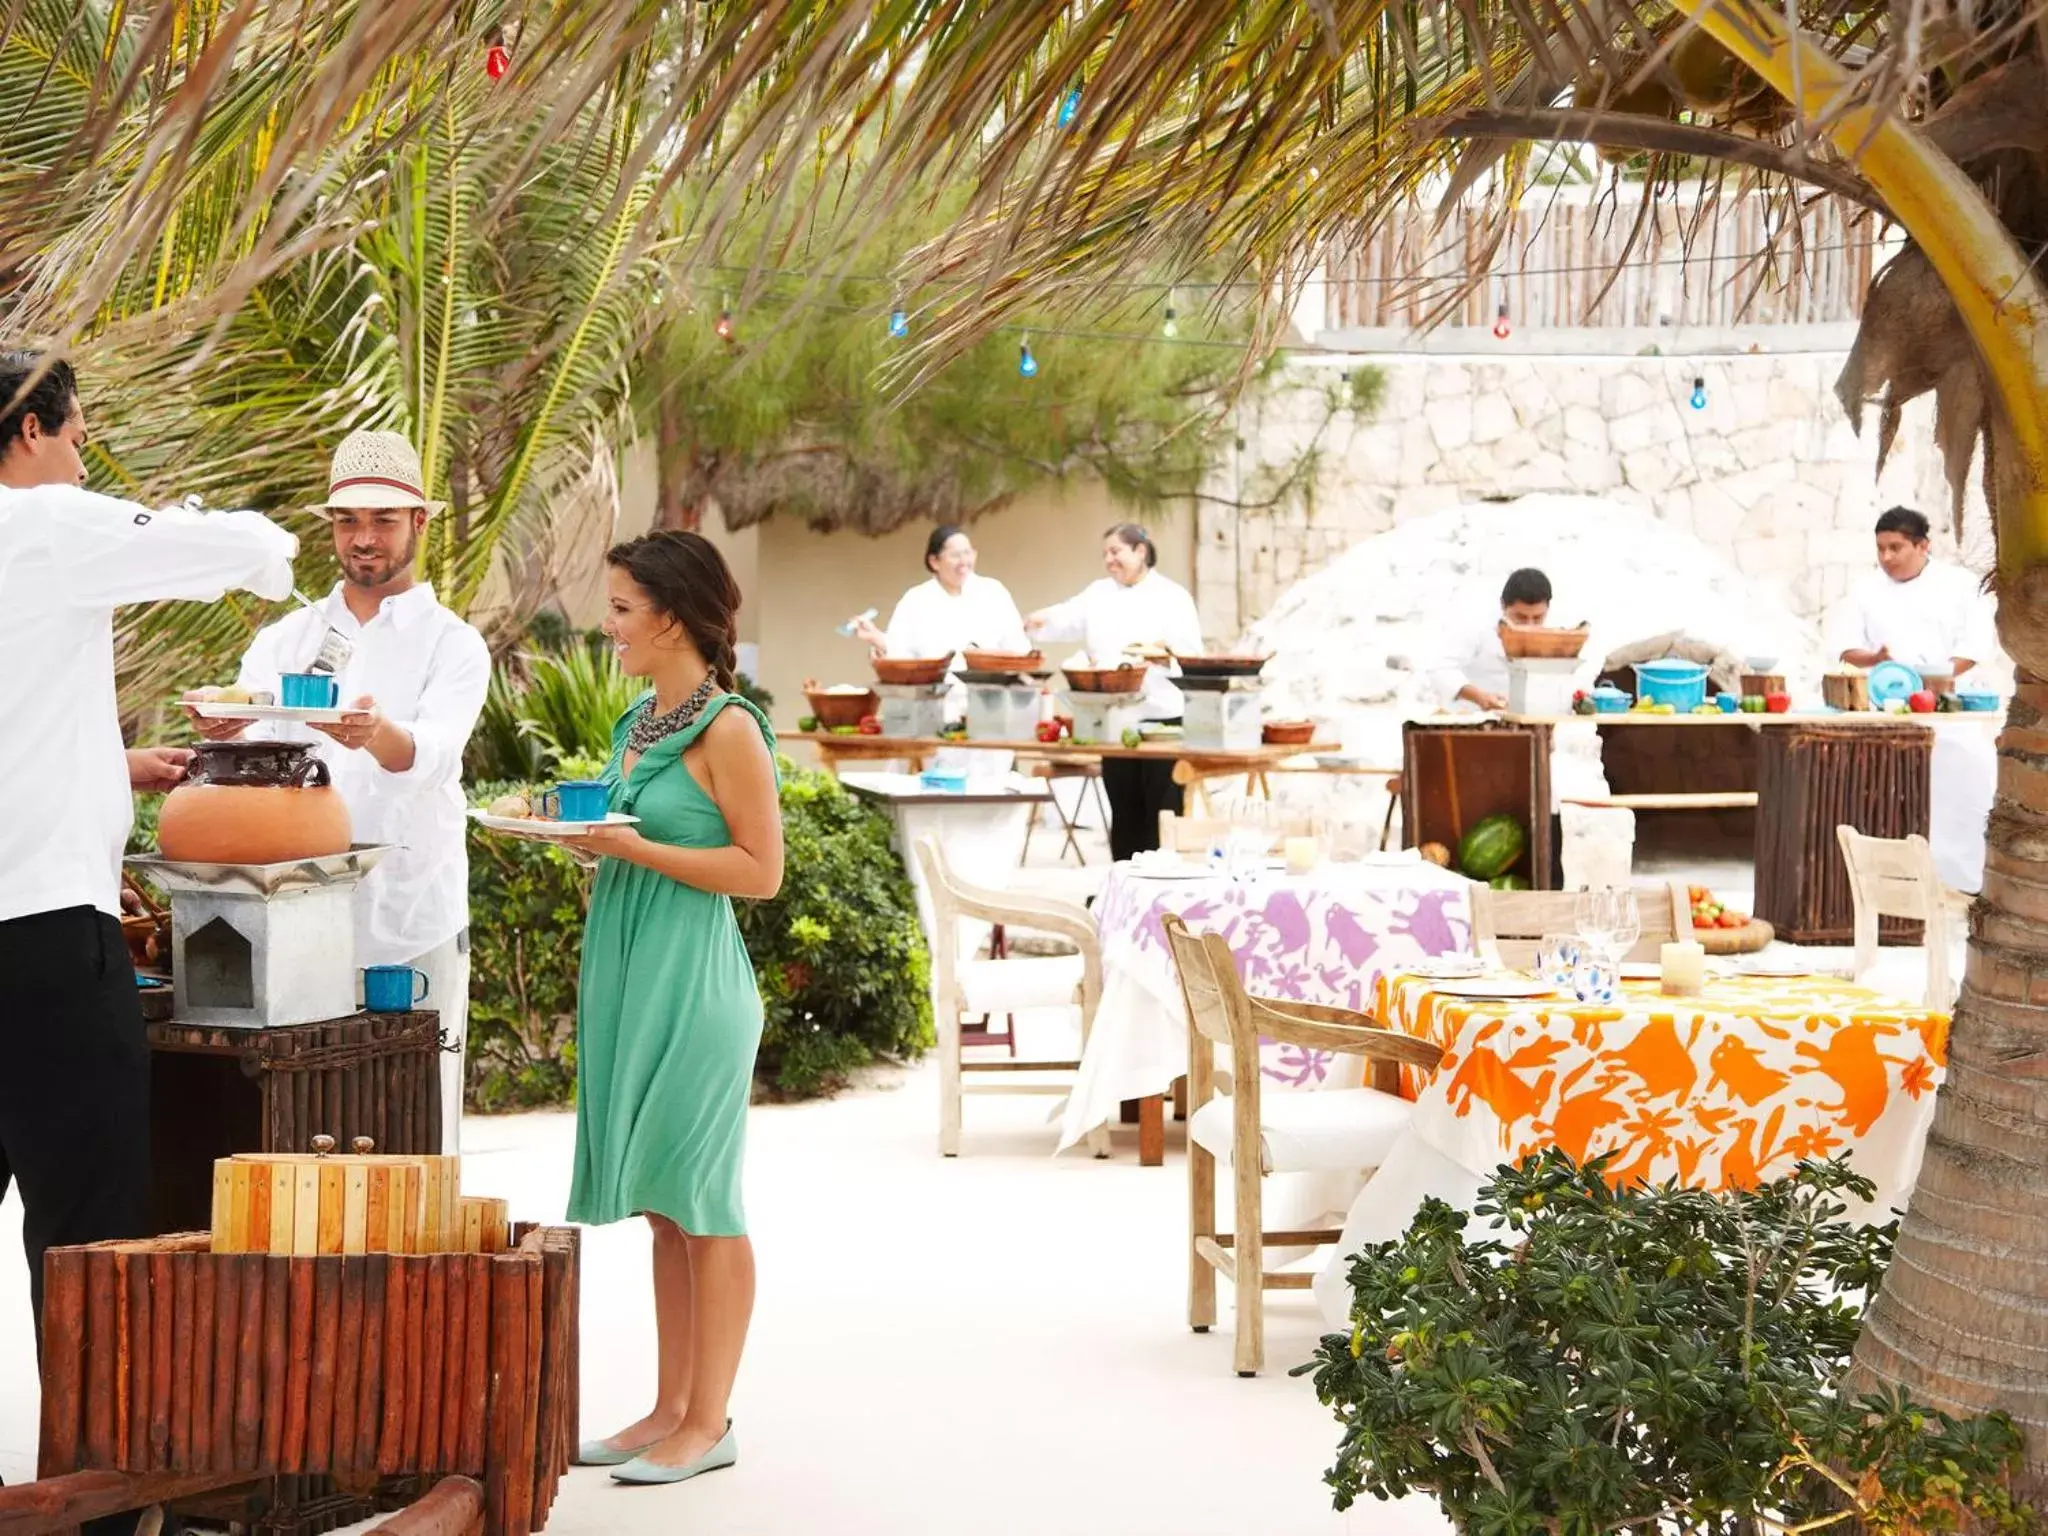 Staff in Viceroy Riviera Maya, a Luxury Villa Resort